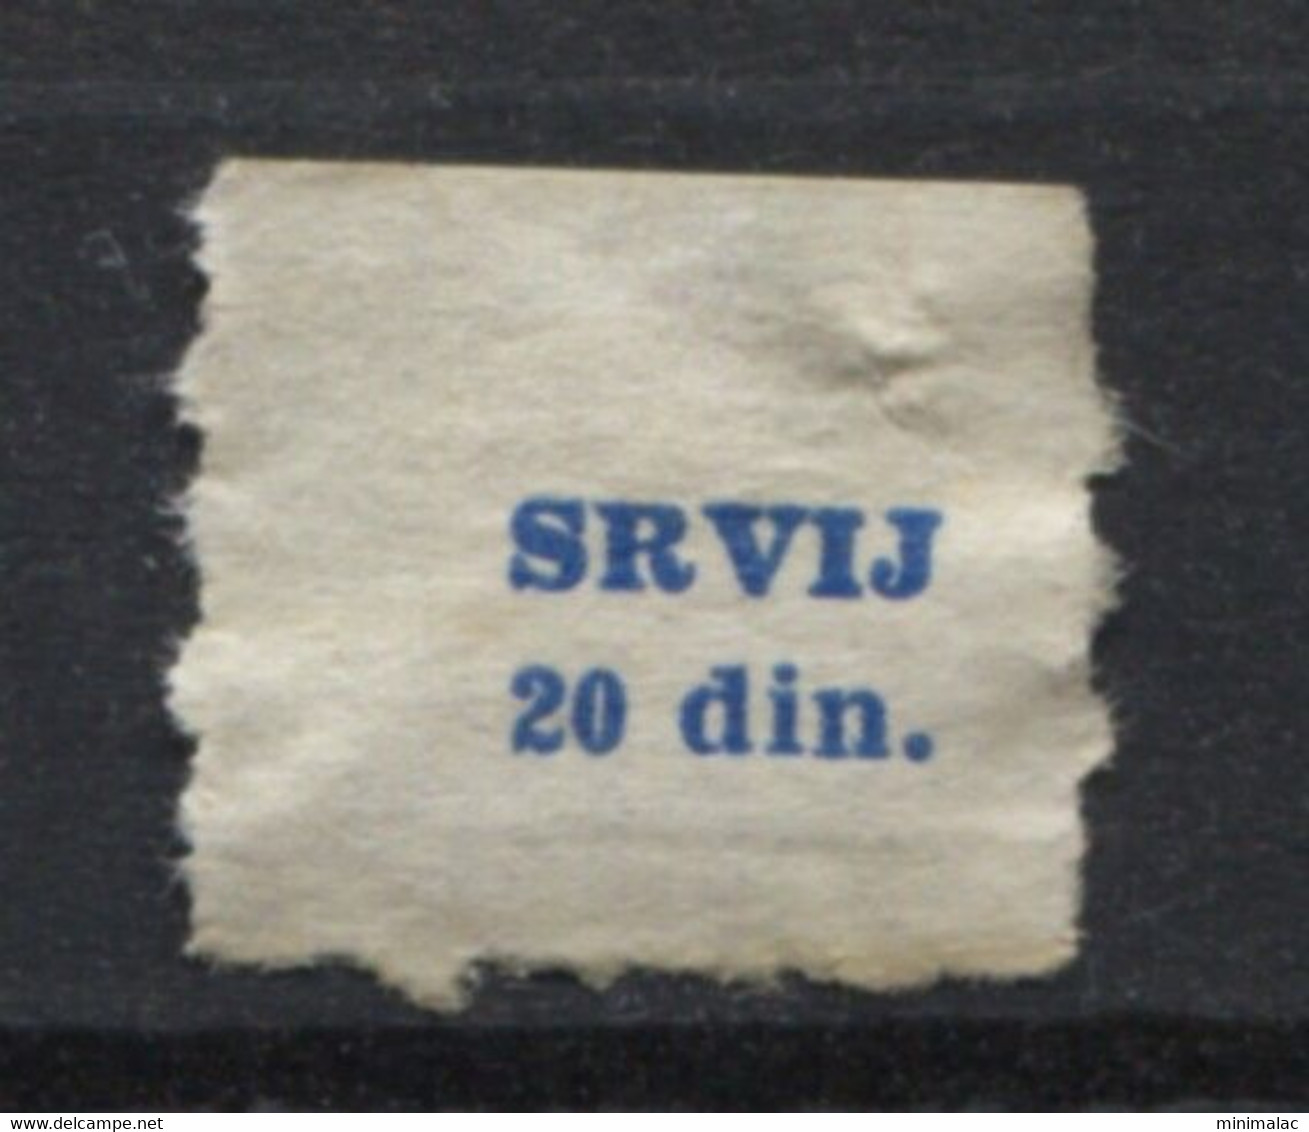 Yugoslavia 1961, Stamp For Membership, SRVIJ, Labor Union, Administrative Stamp - Revenue, Tax Stamp, 20d LATIN LETTERS - Service